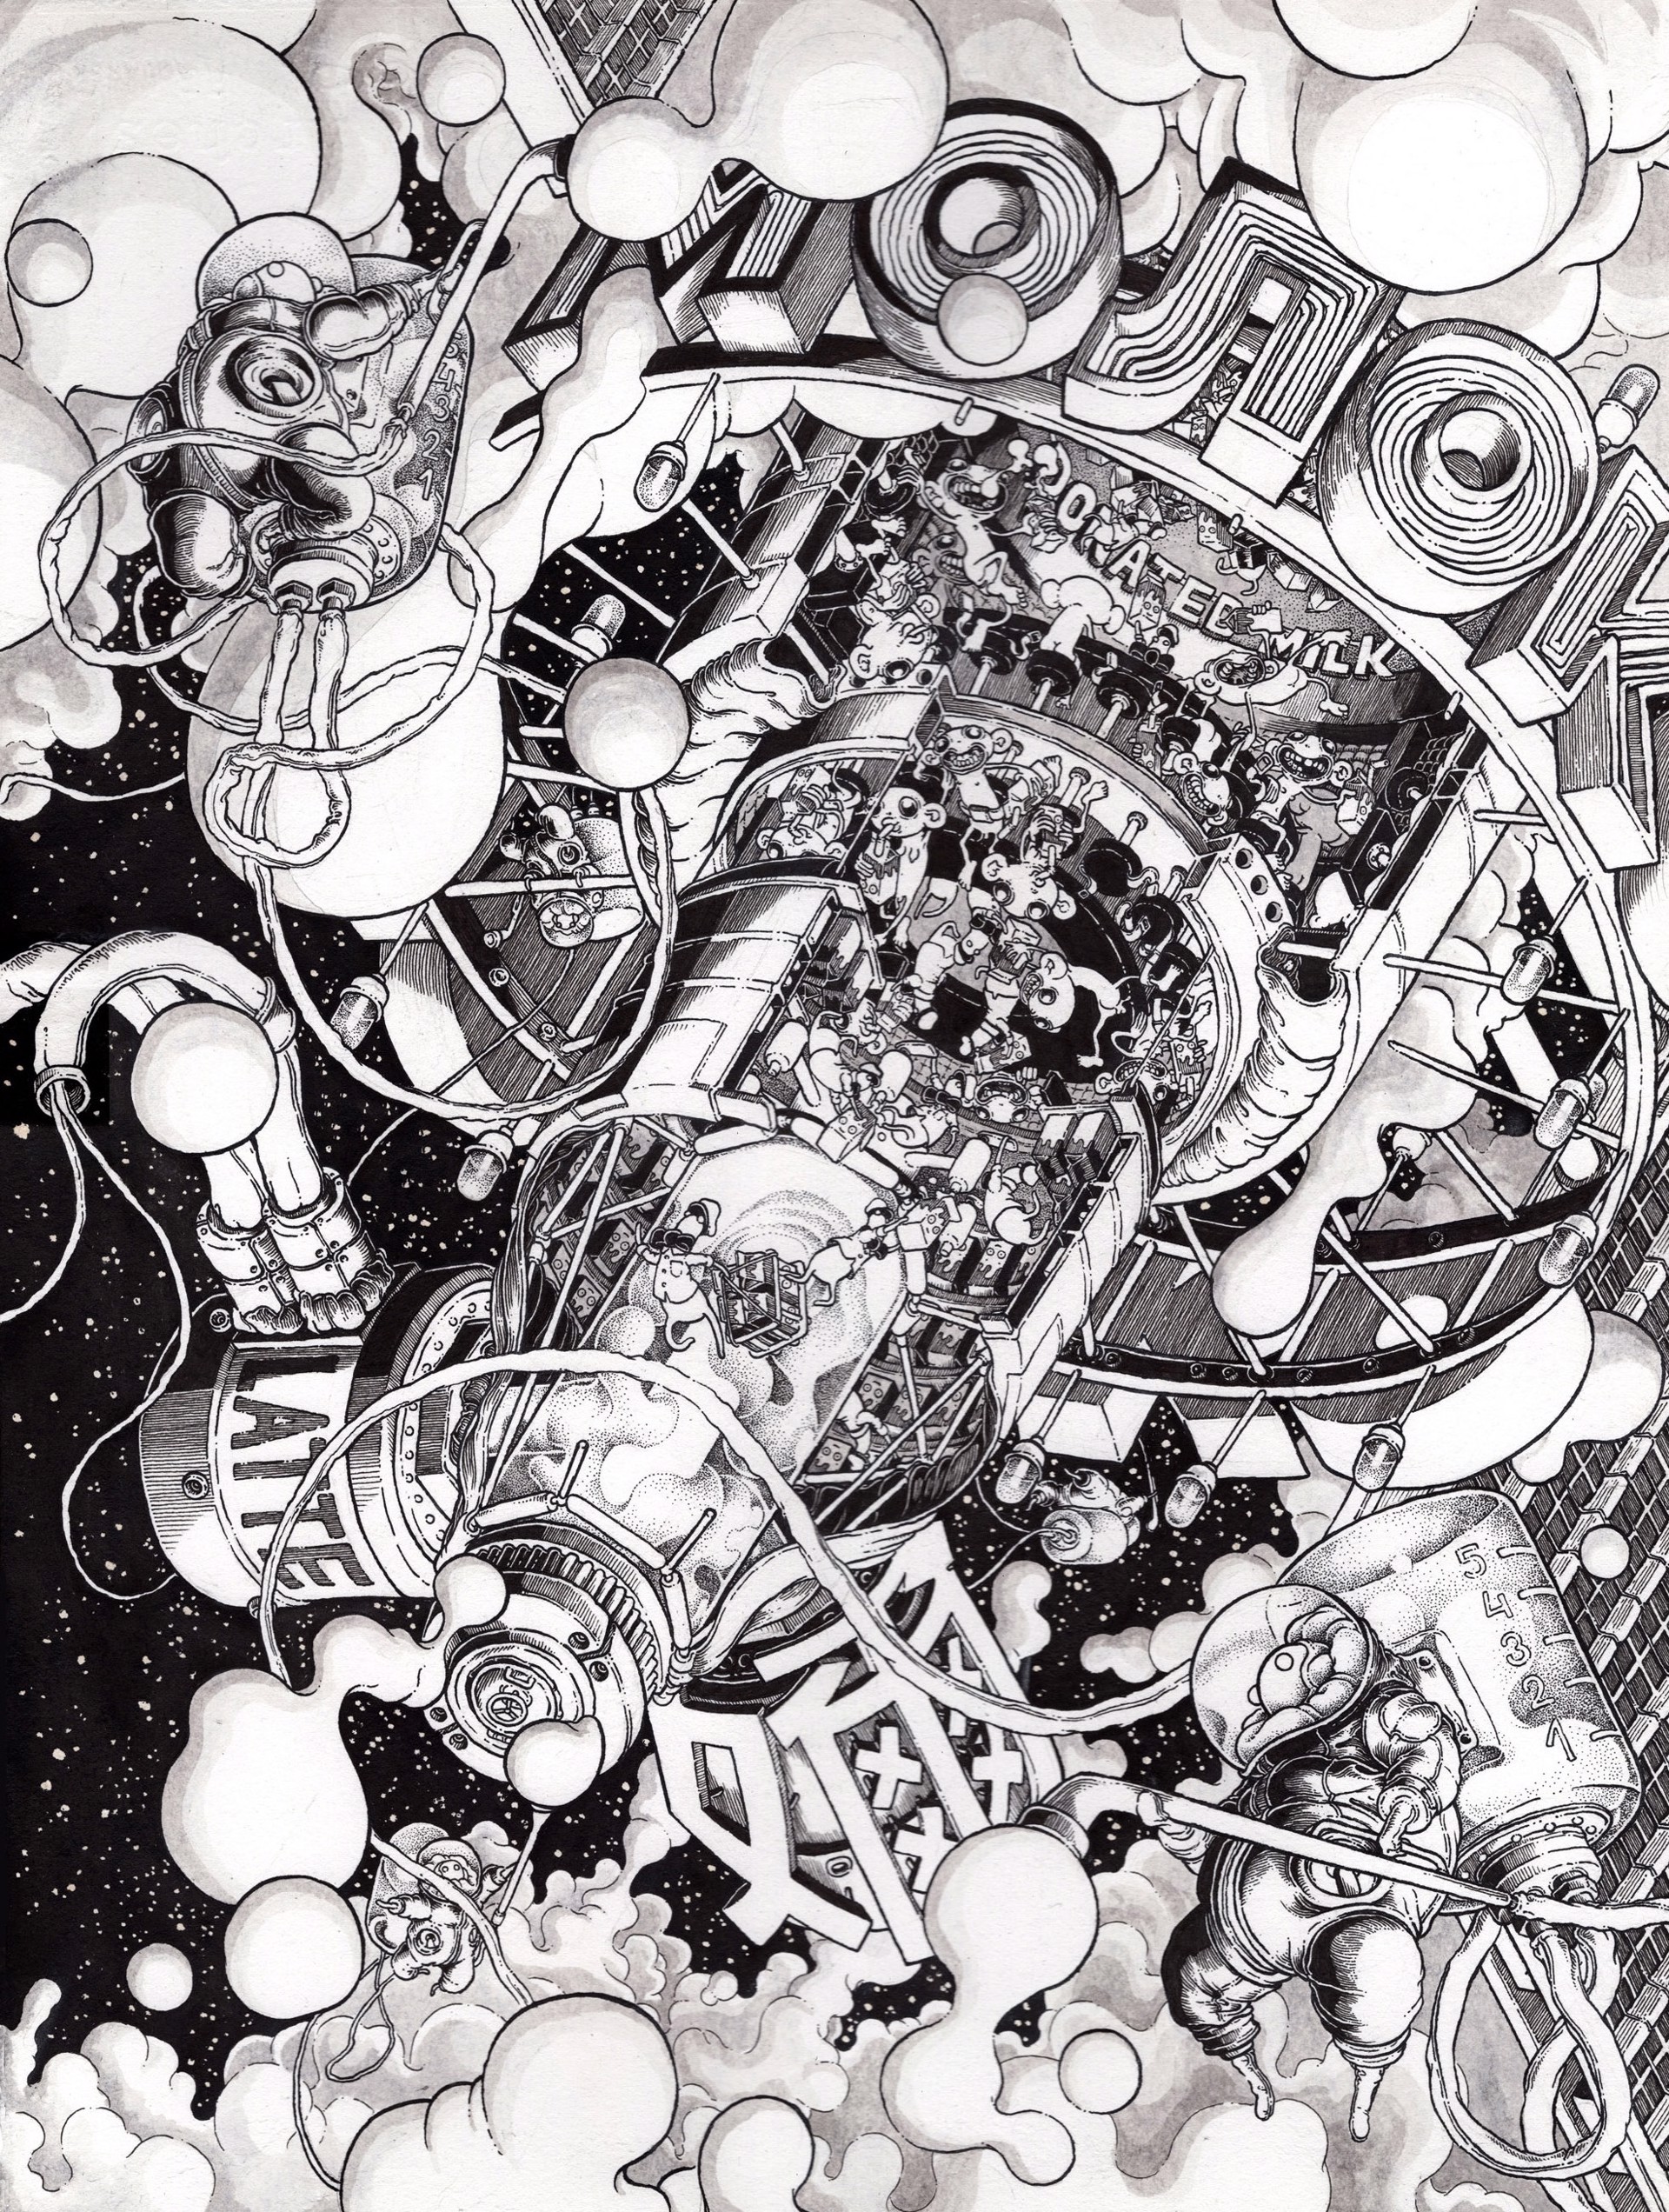 Space Series: Moloko - The Milk Bar by Carles Garcia O'Dowd